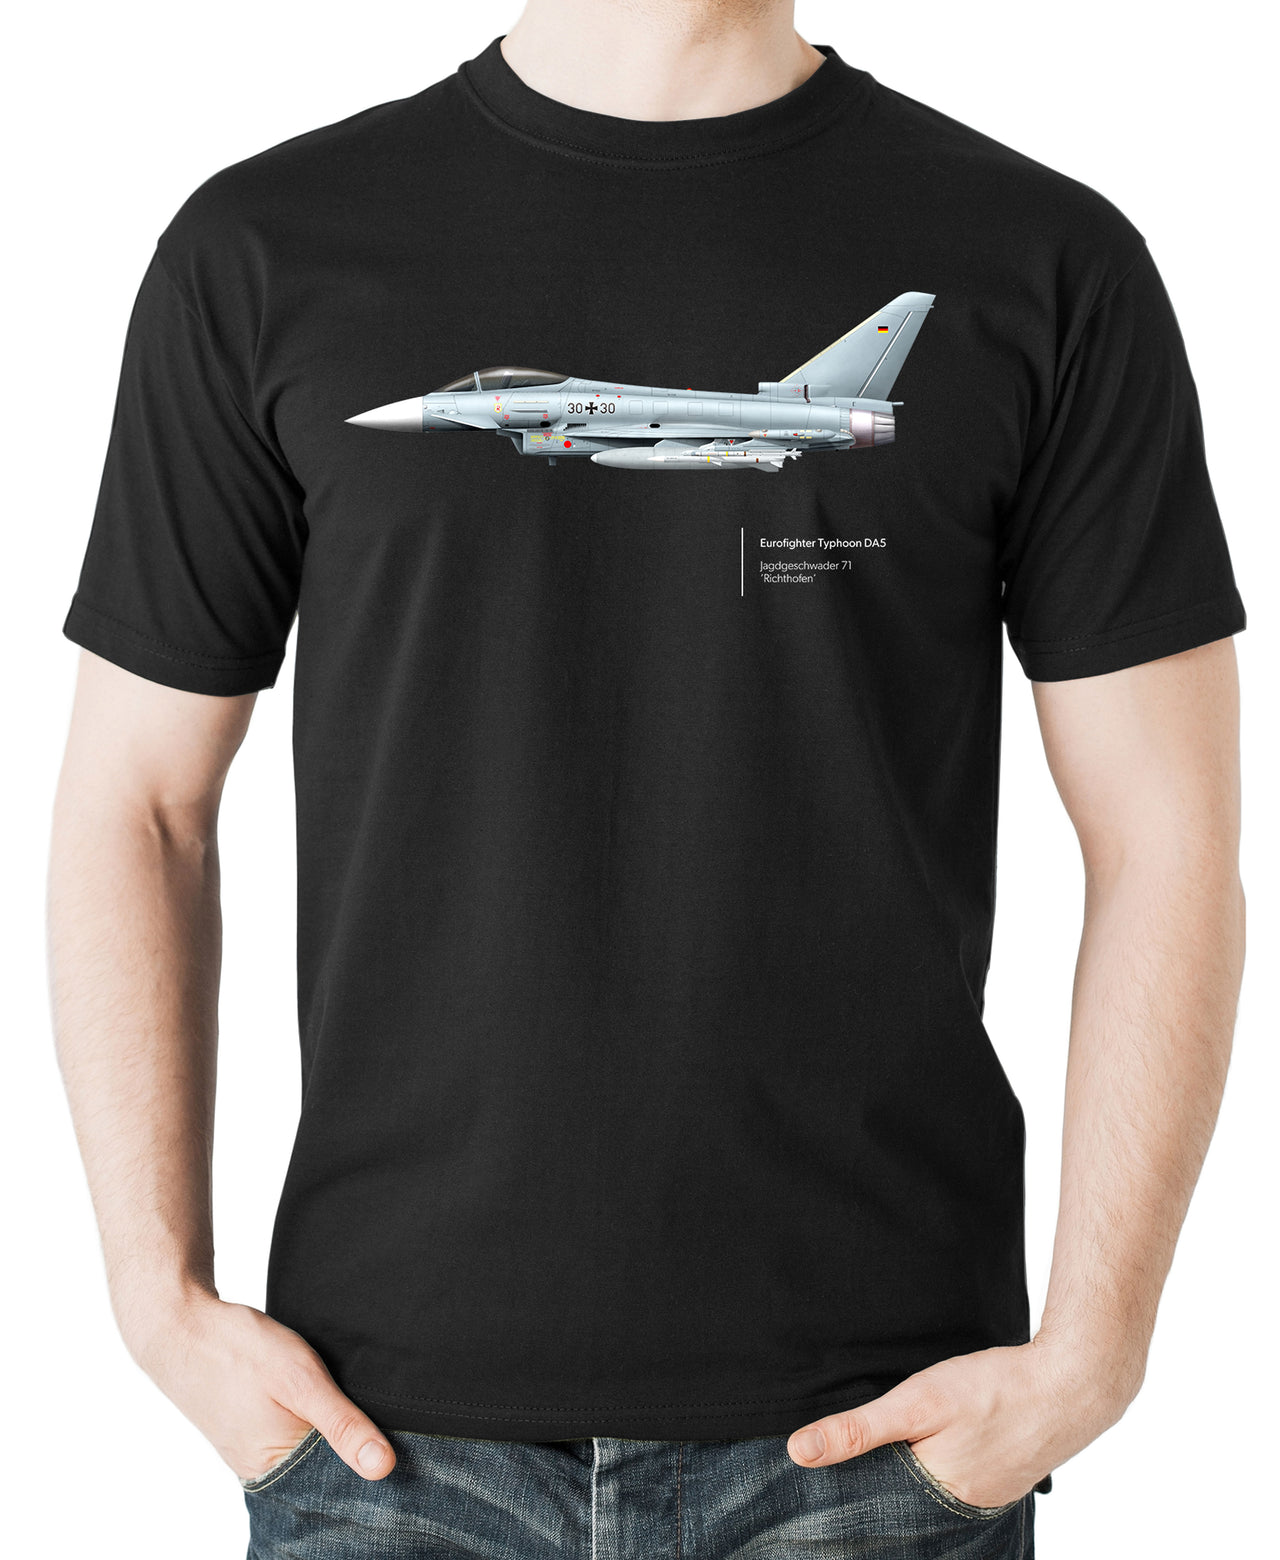 Eurofighter Typhoon JG 71 - T-shirt